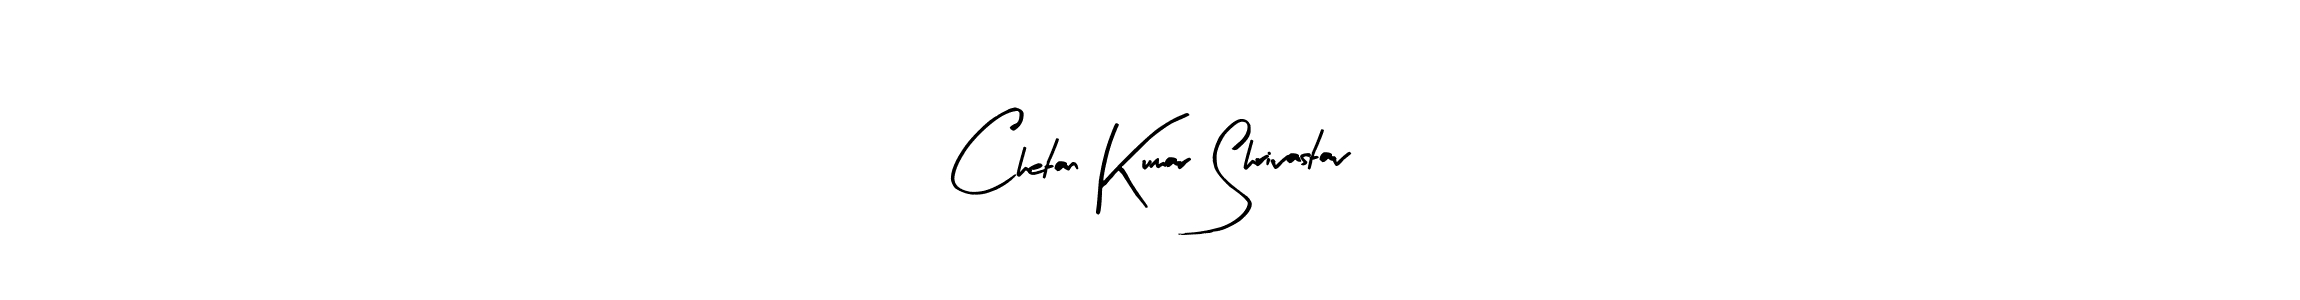 How to Draw Chetan Kumar Shrivastav signature style? Arty Signature is a latest design signature styles for name Chetan Kumar Shrivastav. Chetan Kumar Shrivastav signature style 8 images and pictures png